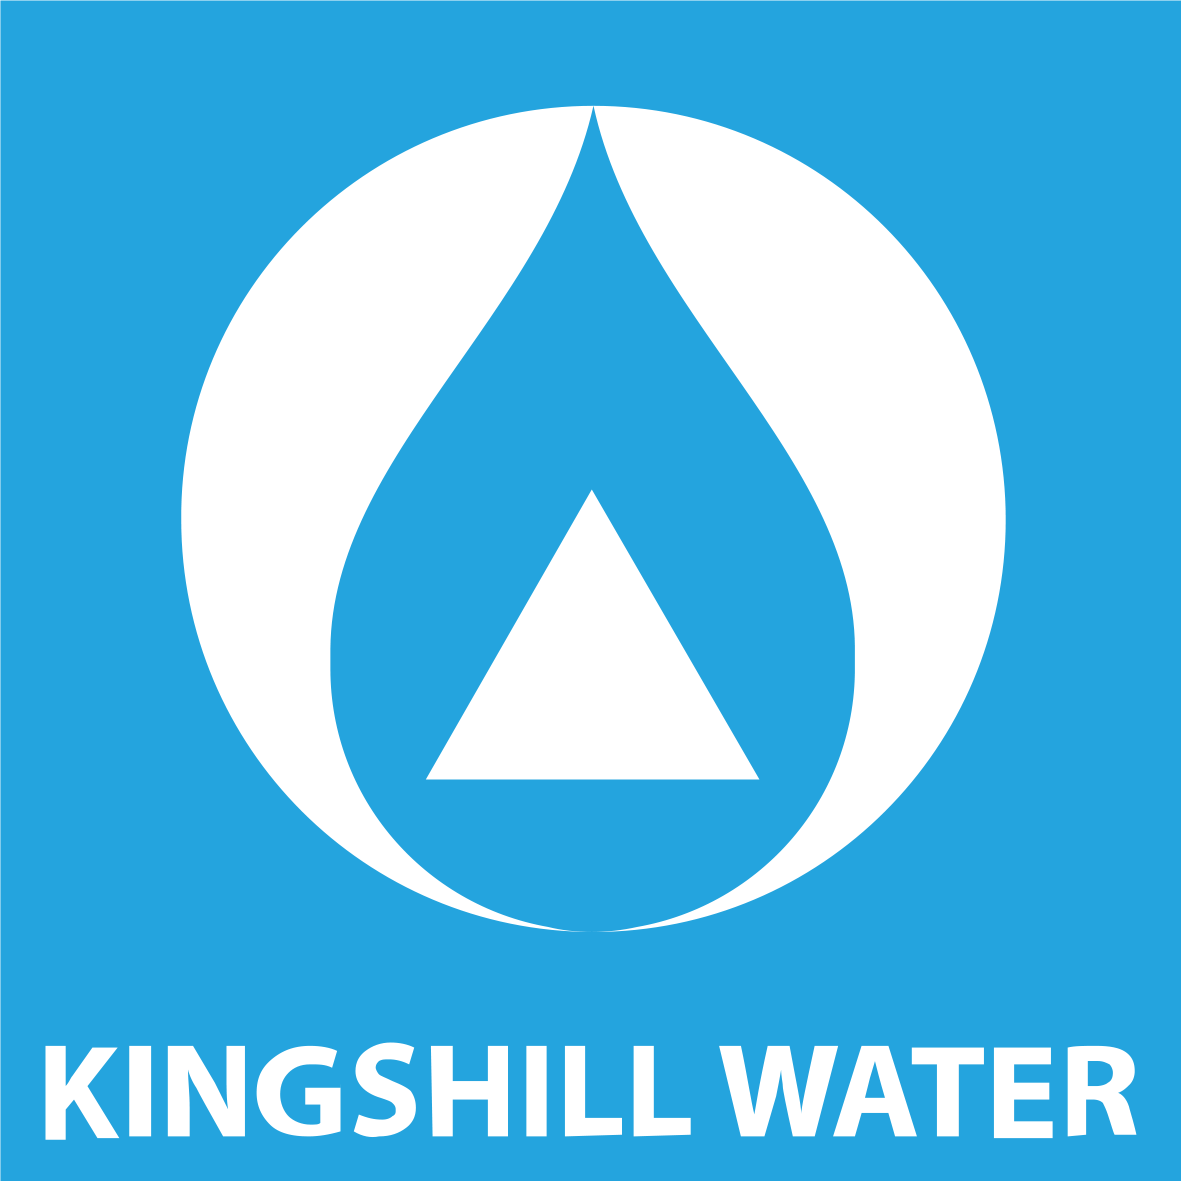 Kingshill water